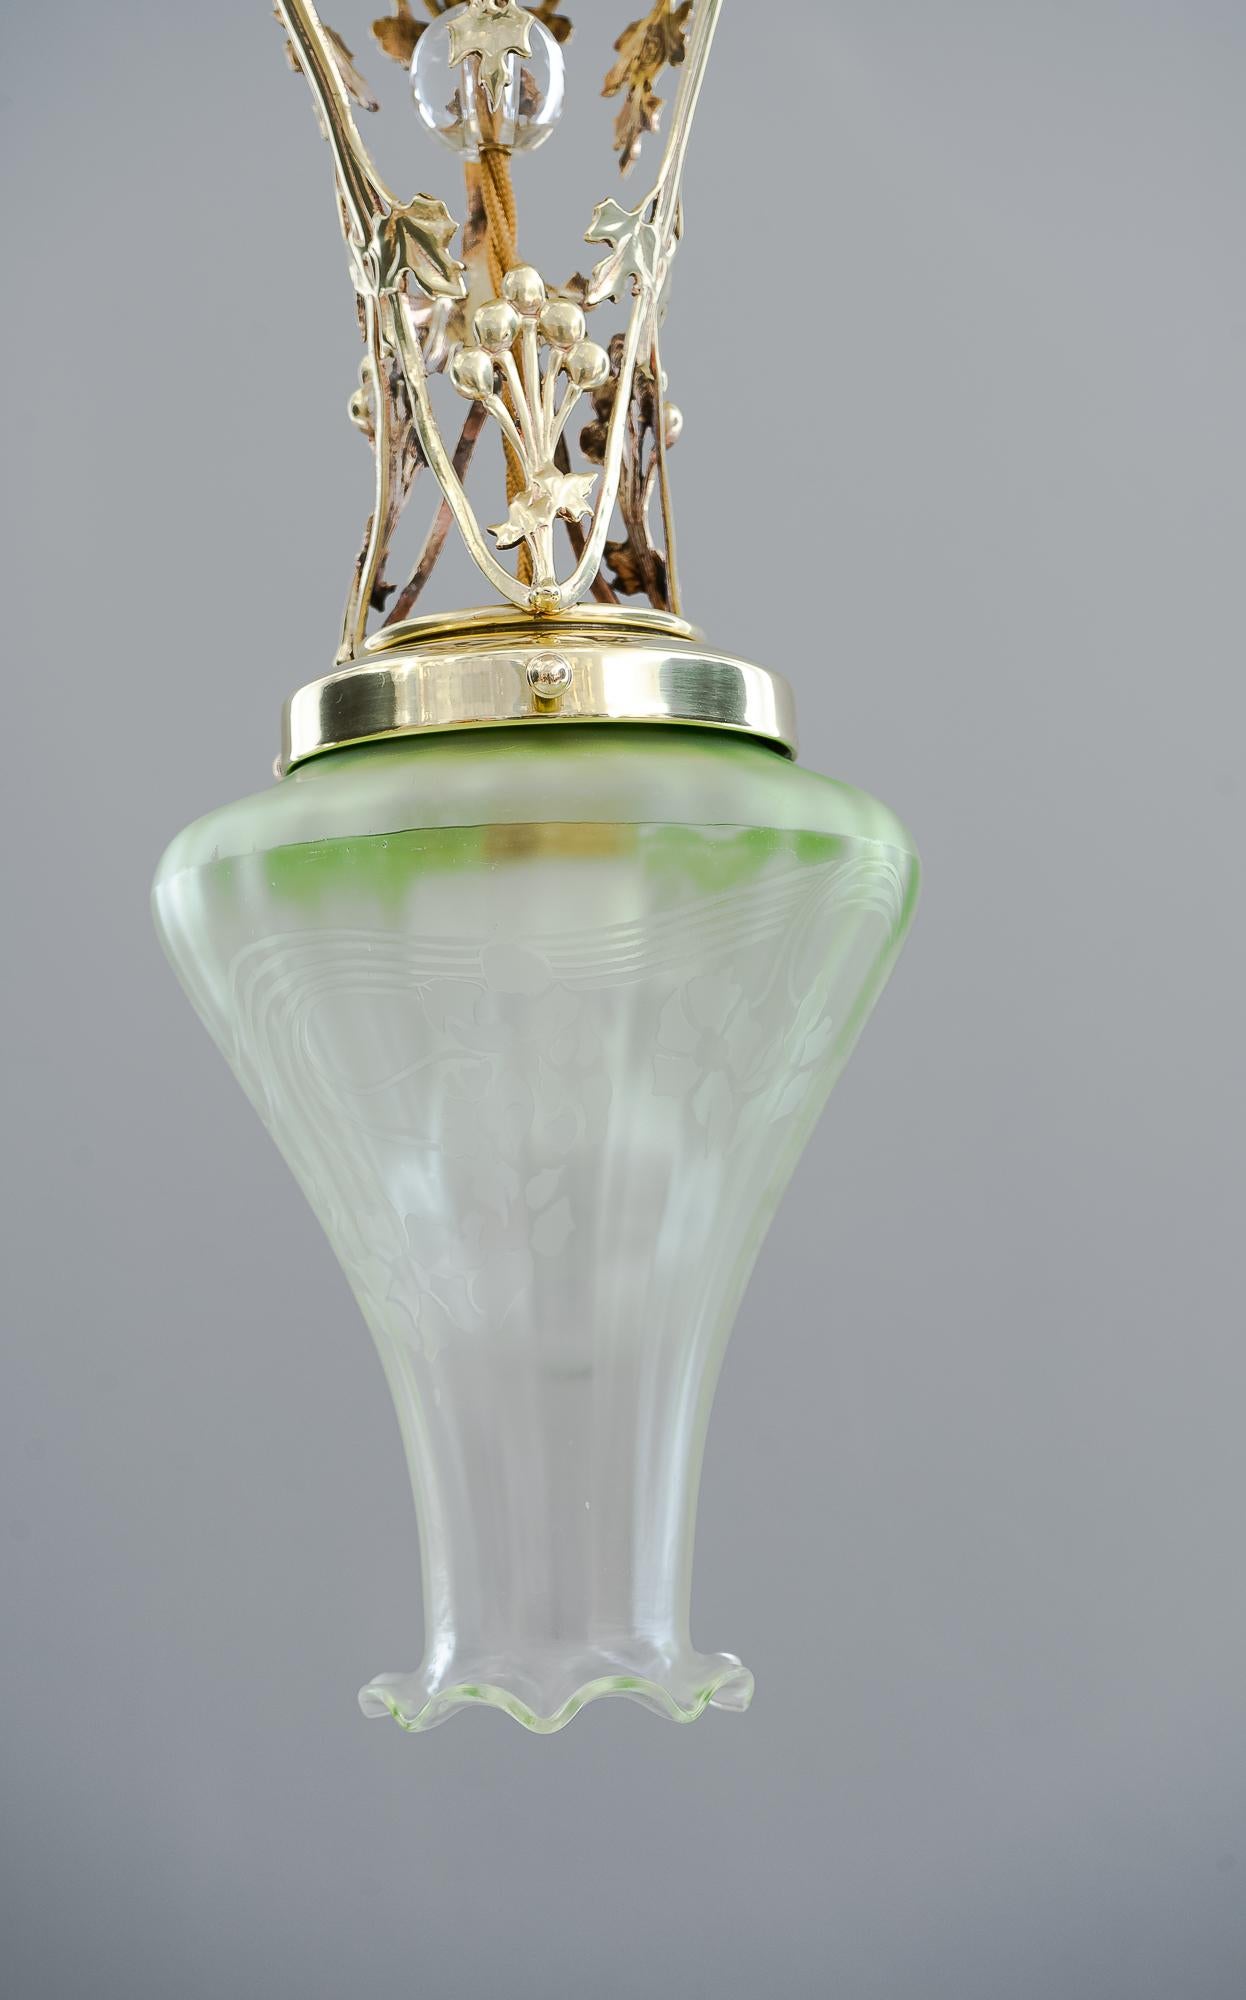 Polished Jugendstil Ceiling Lamp Vienna circa 1908 with Original Glass Shade For Sale